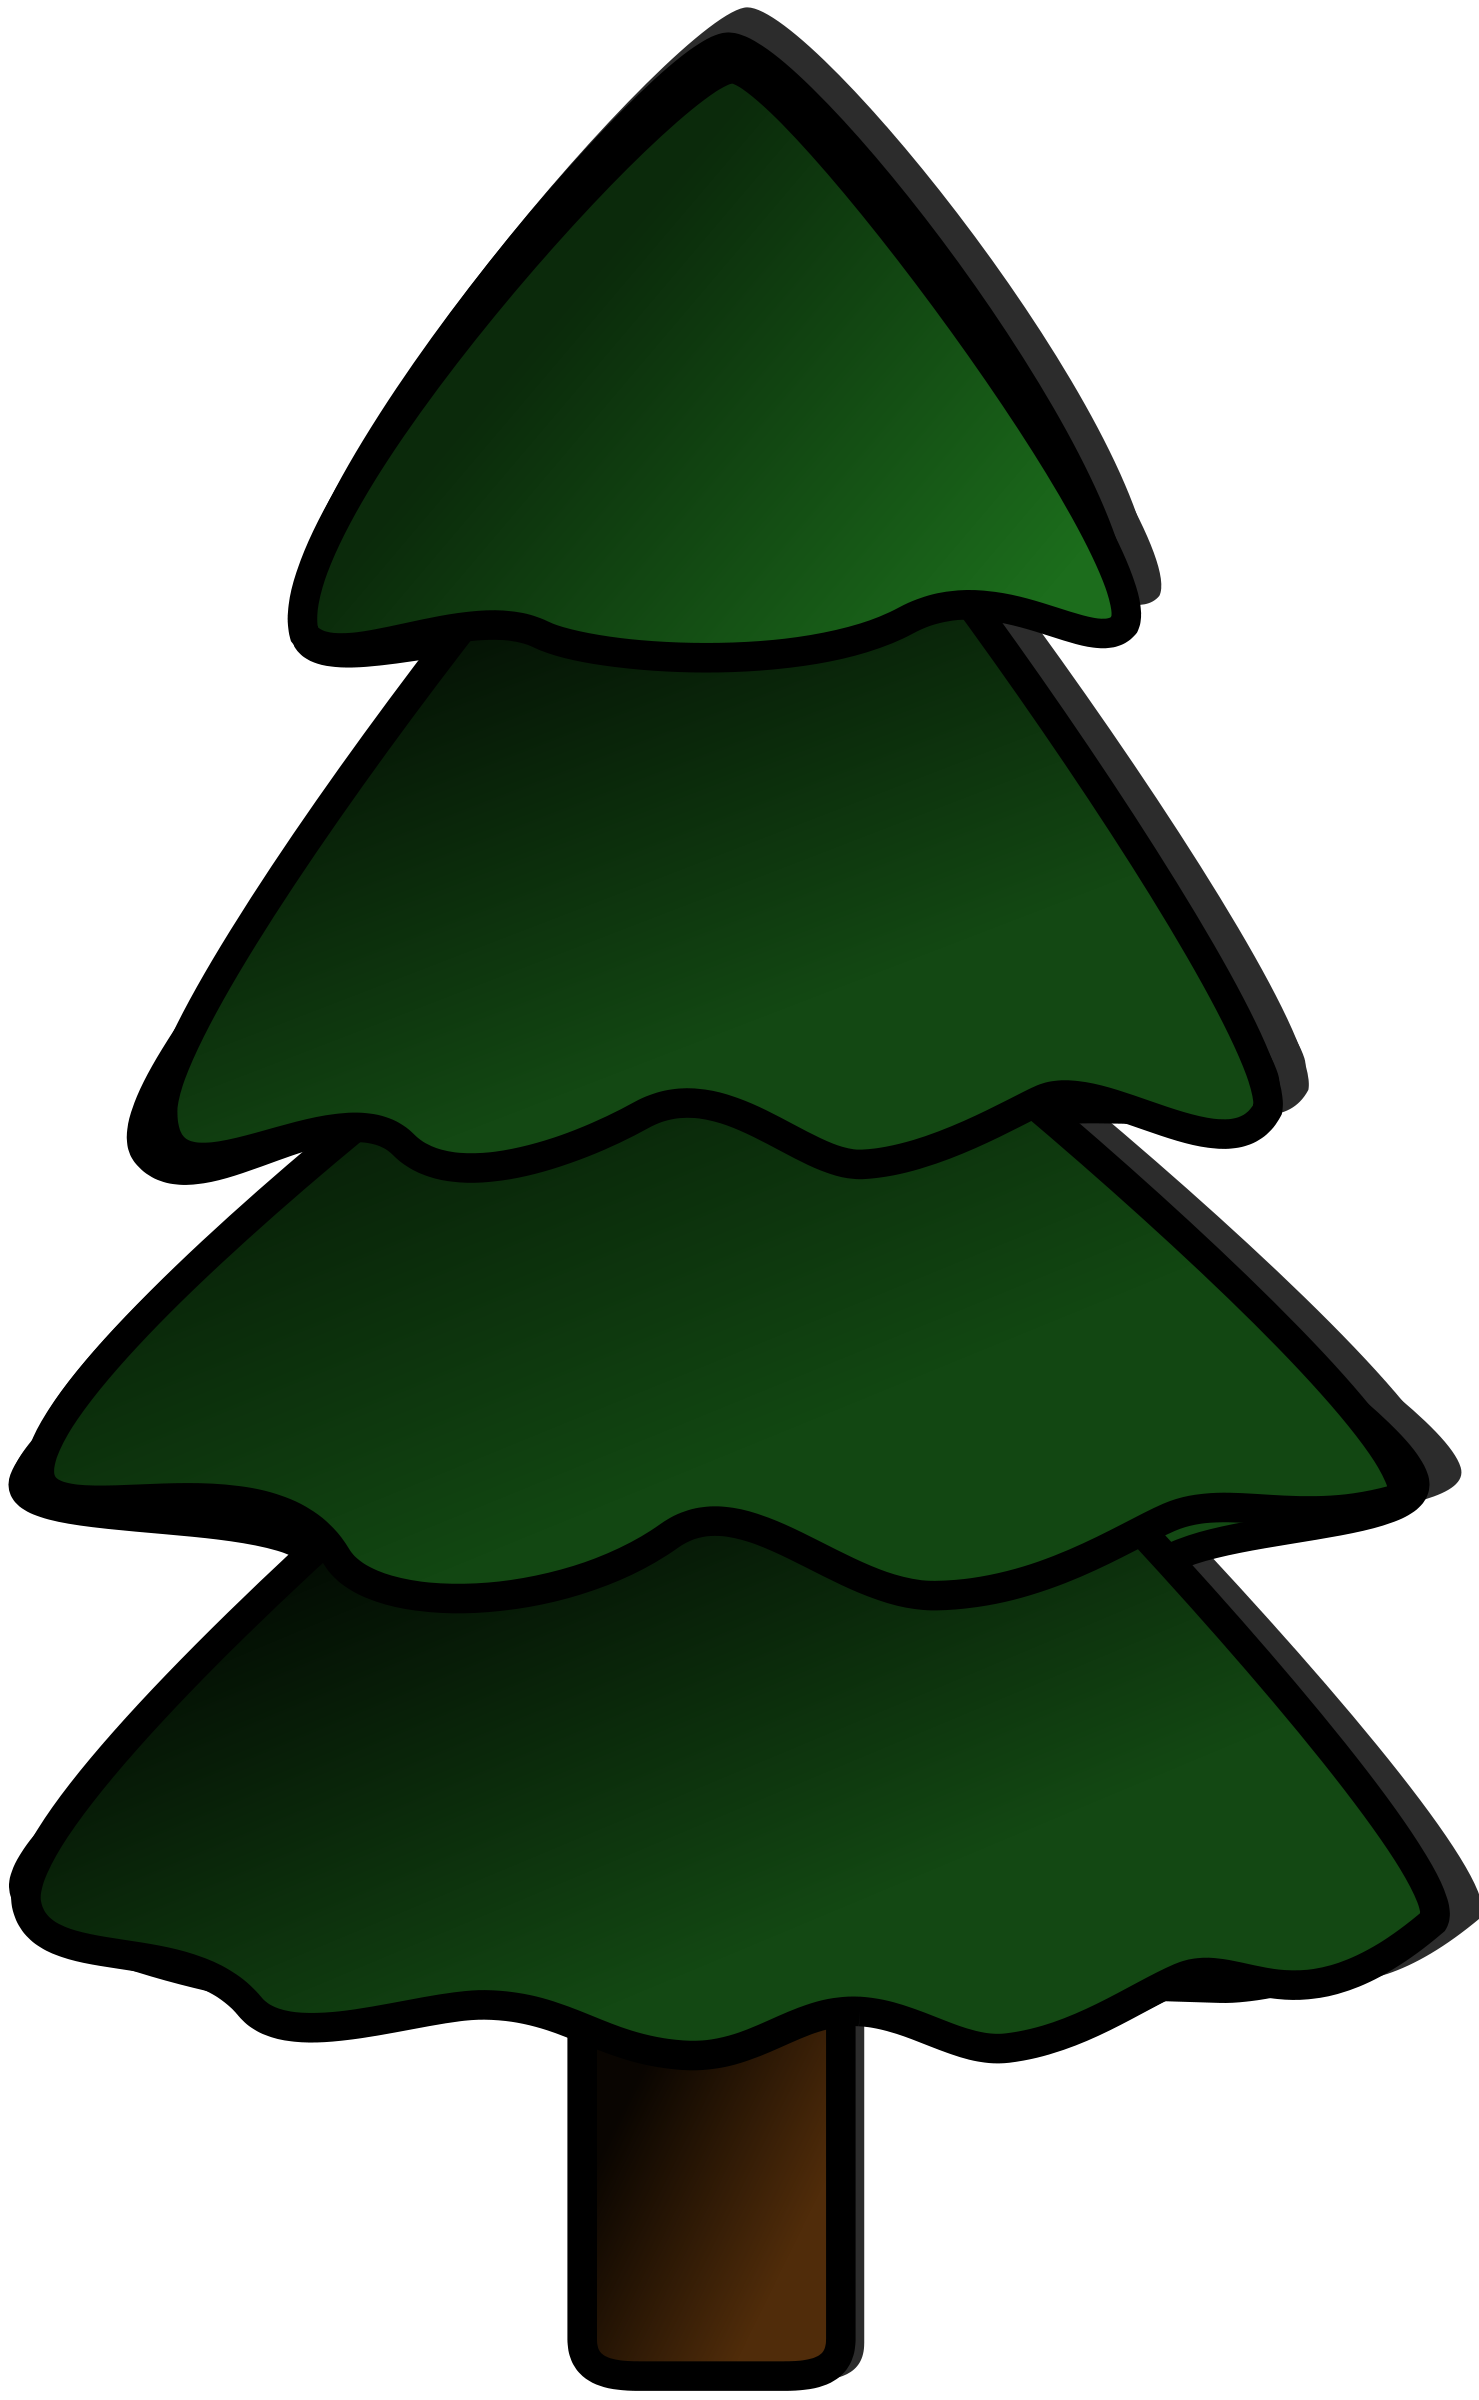 Images For > Pine Tree Logo Clip Art